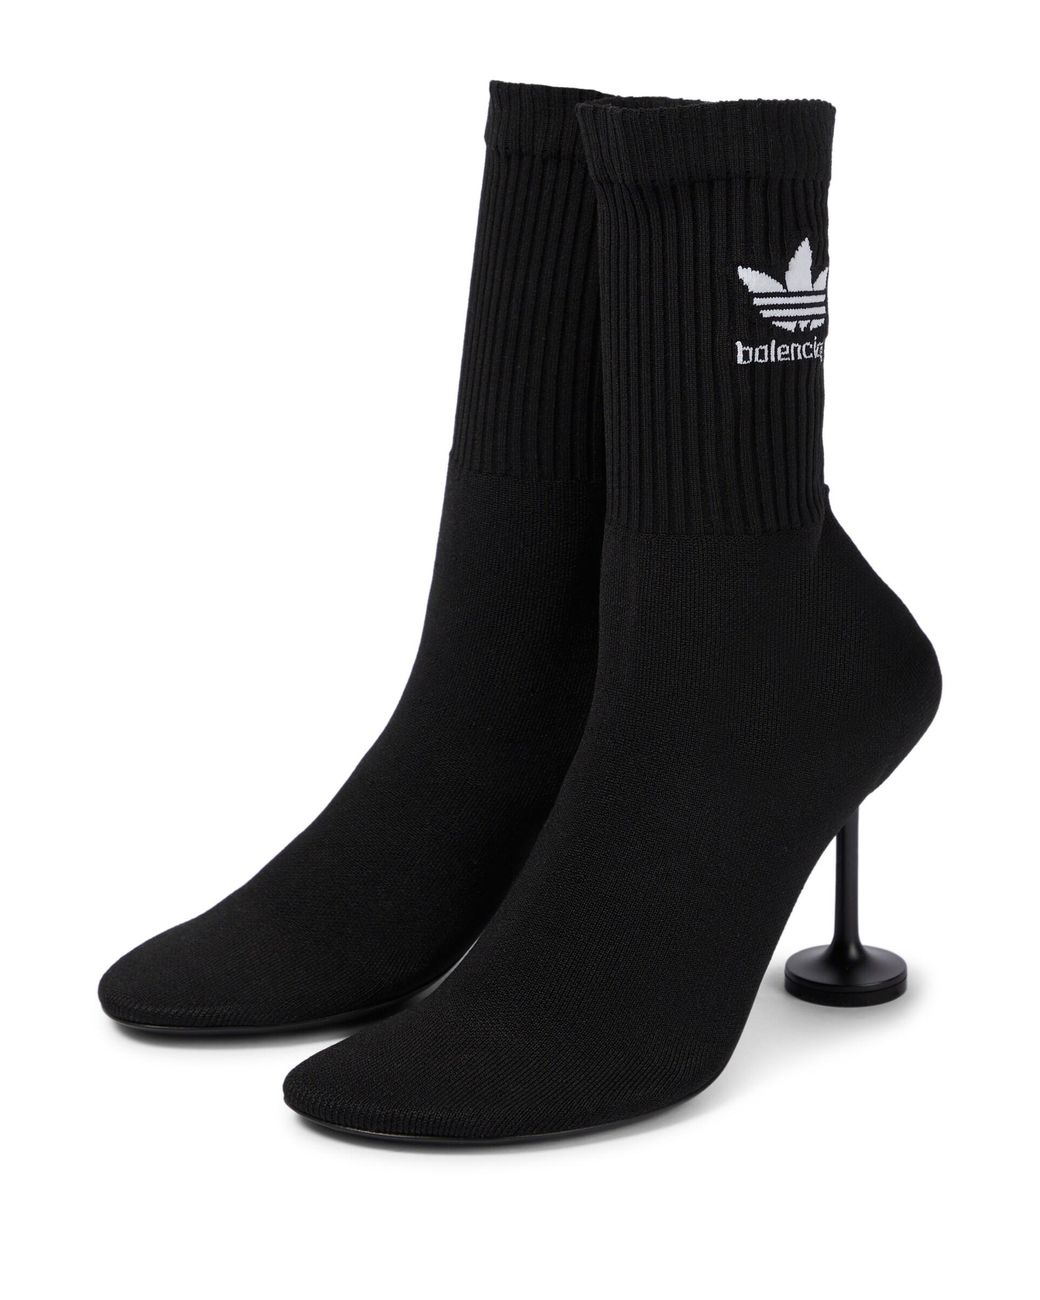 Balenciaga X Adidas Sock Ankle Boots in Black | Lyst